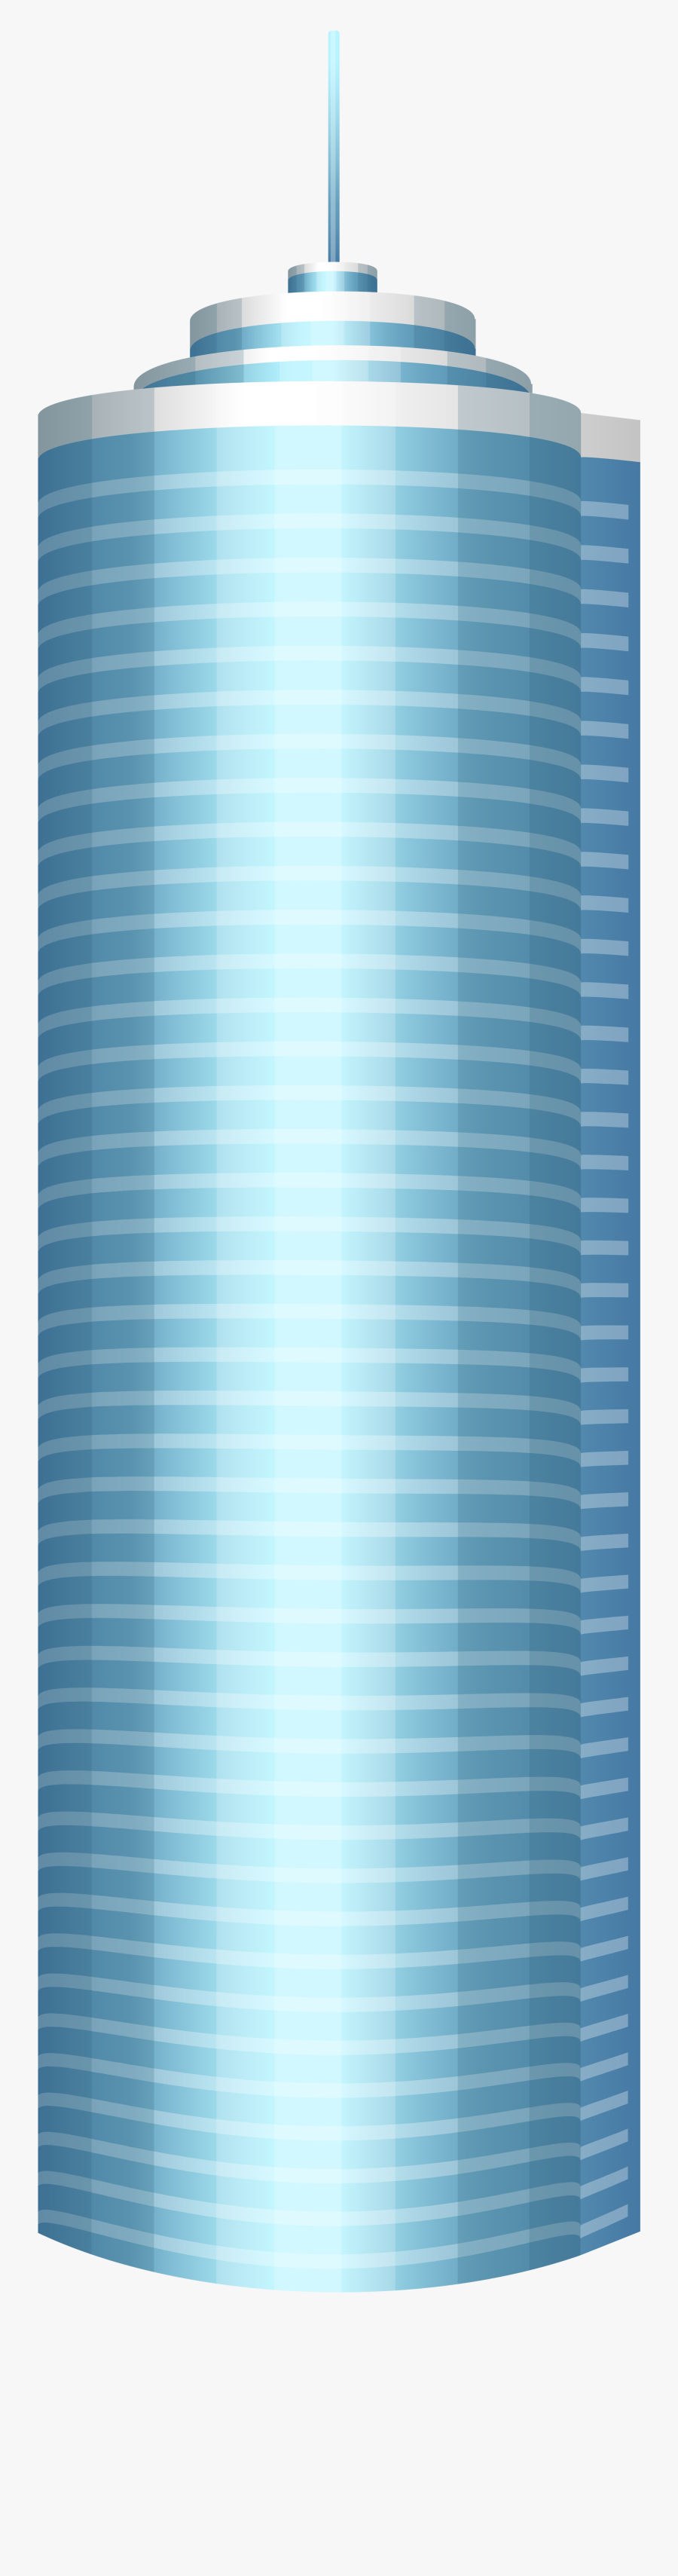 Blue Round Skyscraper Png Clipart - Blue Skyscraper Clip Art, Transparent Clipart